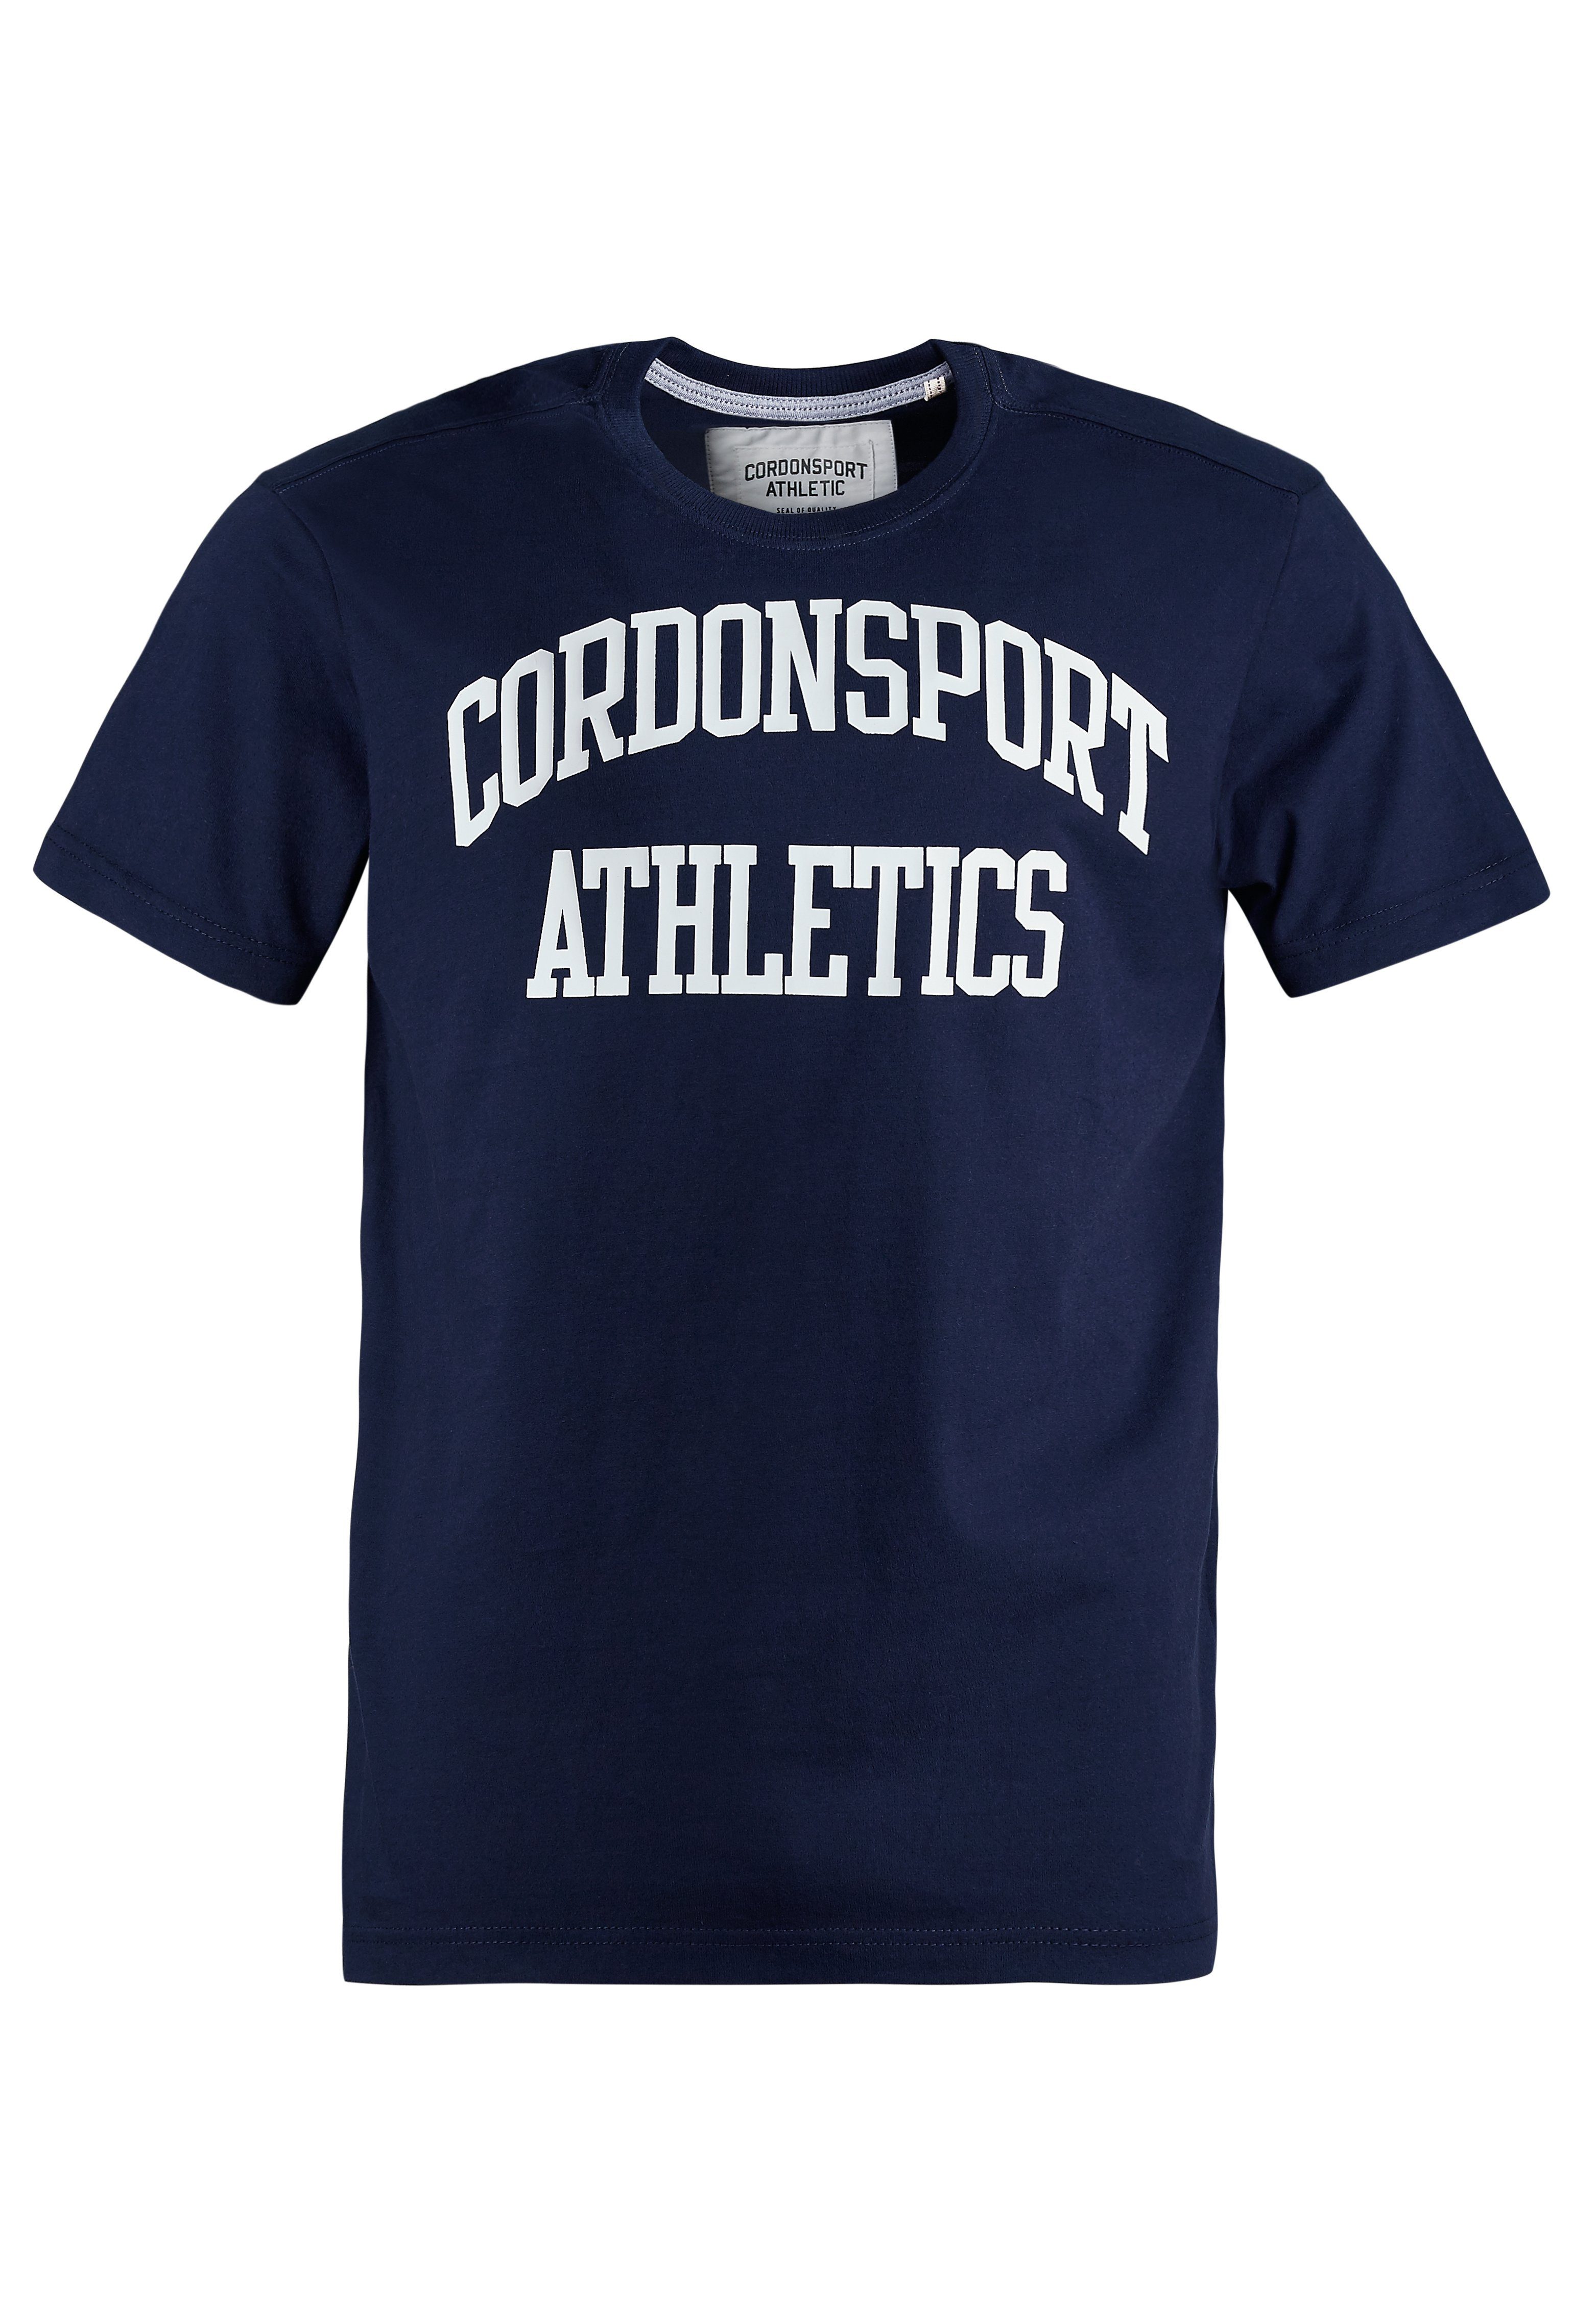 Cordon Sport T-Shirt ALEX 060 66 navy